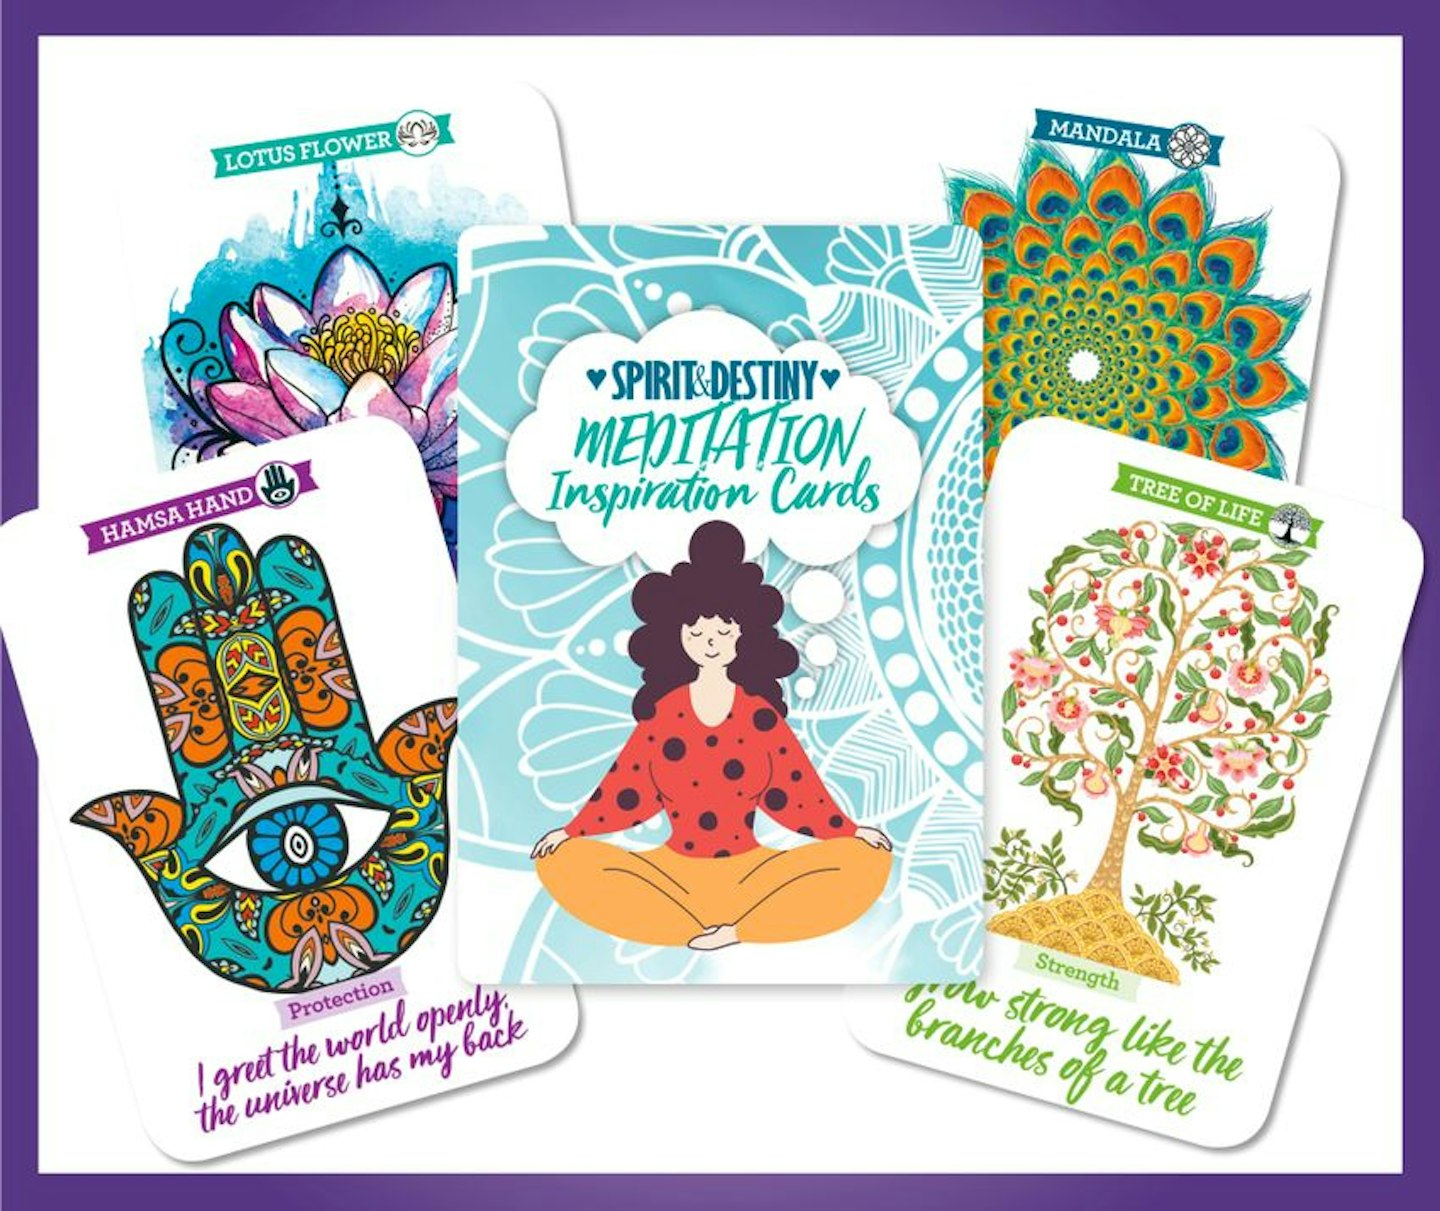 Meditation Inspiration cards